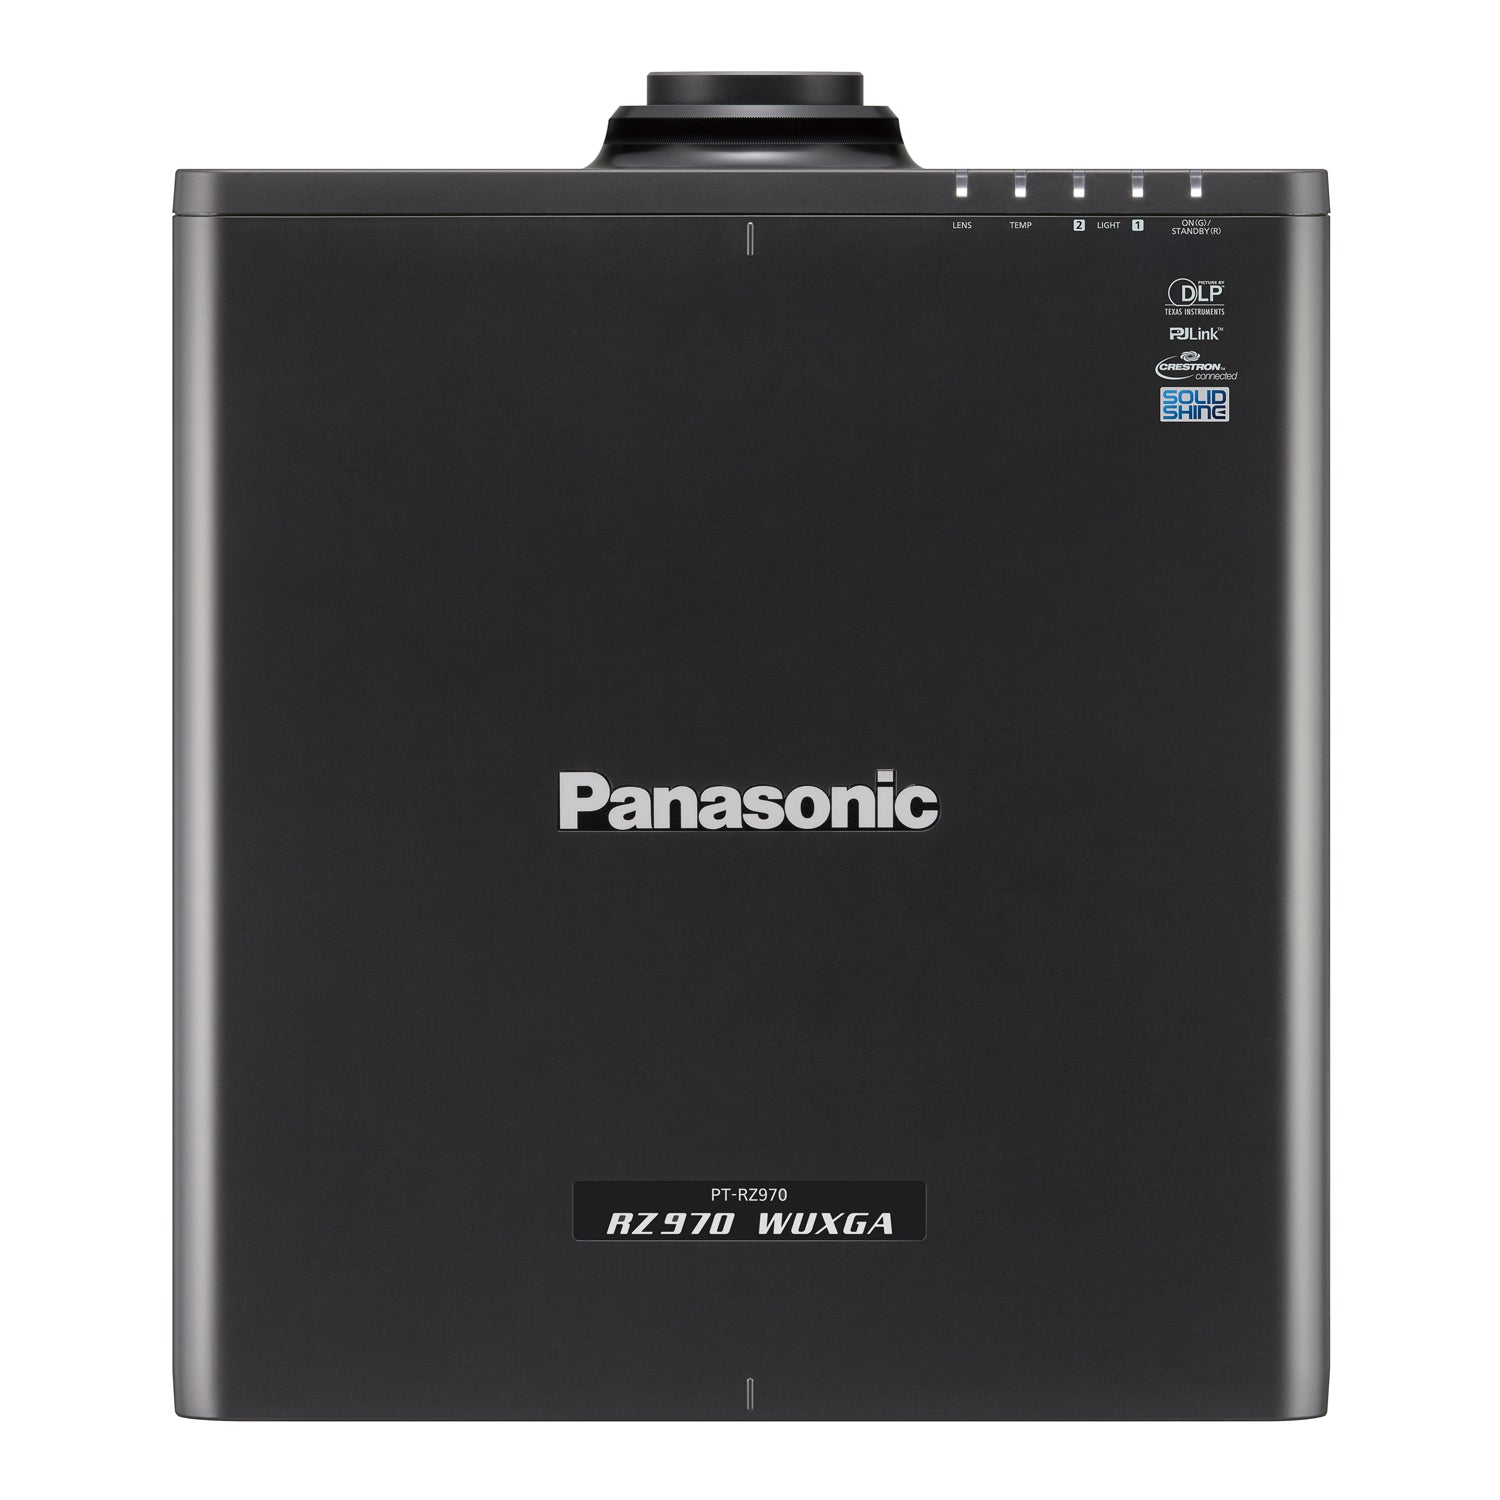 Panasonic PT-RZ970 10,000 Lumen DLP Projector